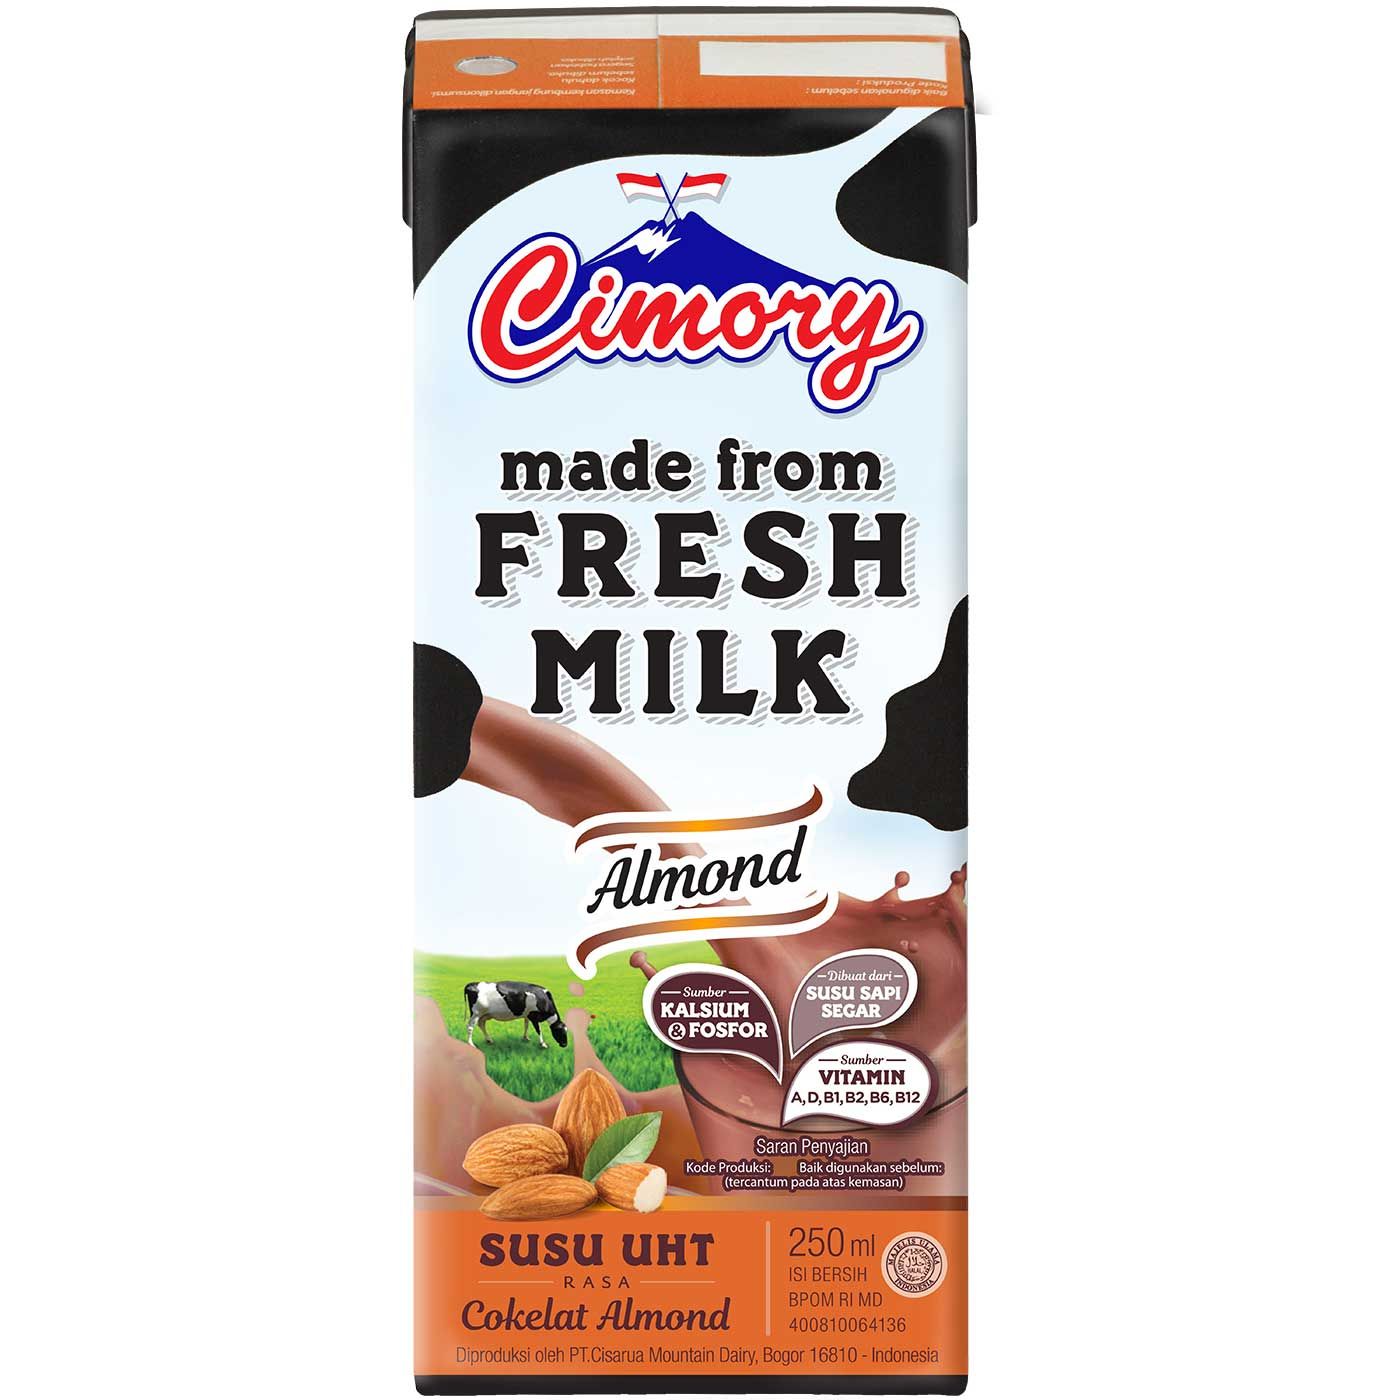 Cimory Uht Milk Almond 250ml  - 1